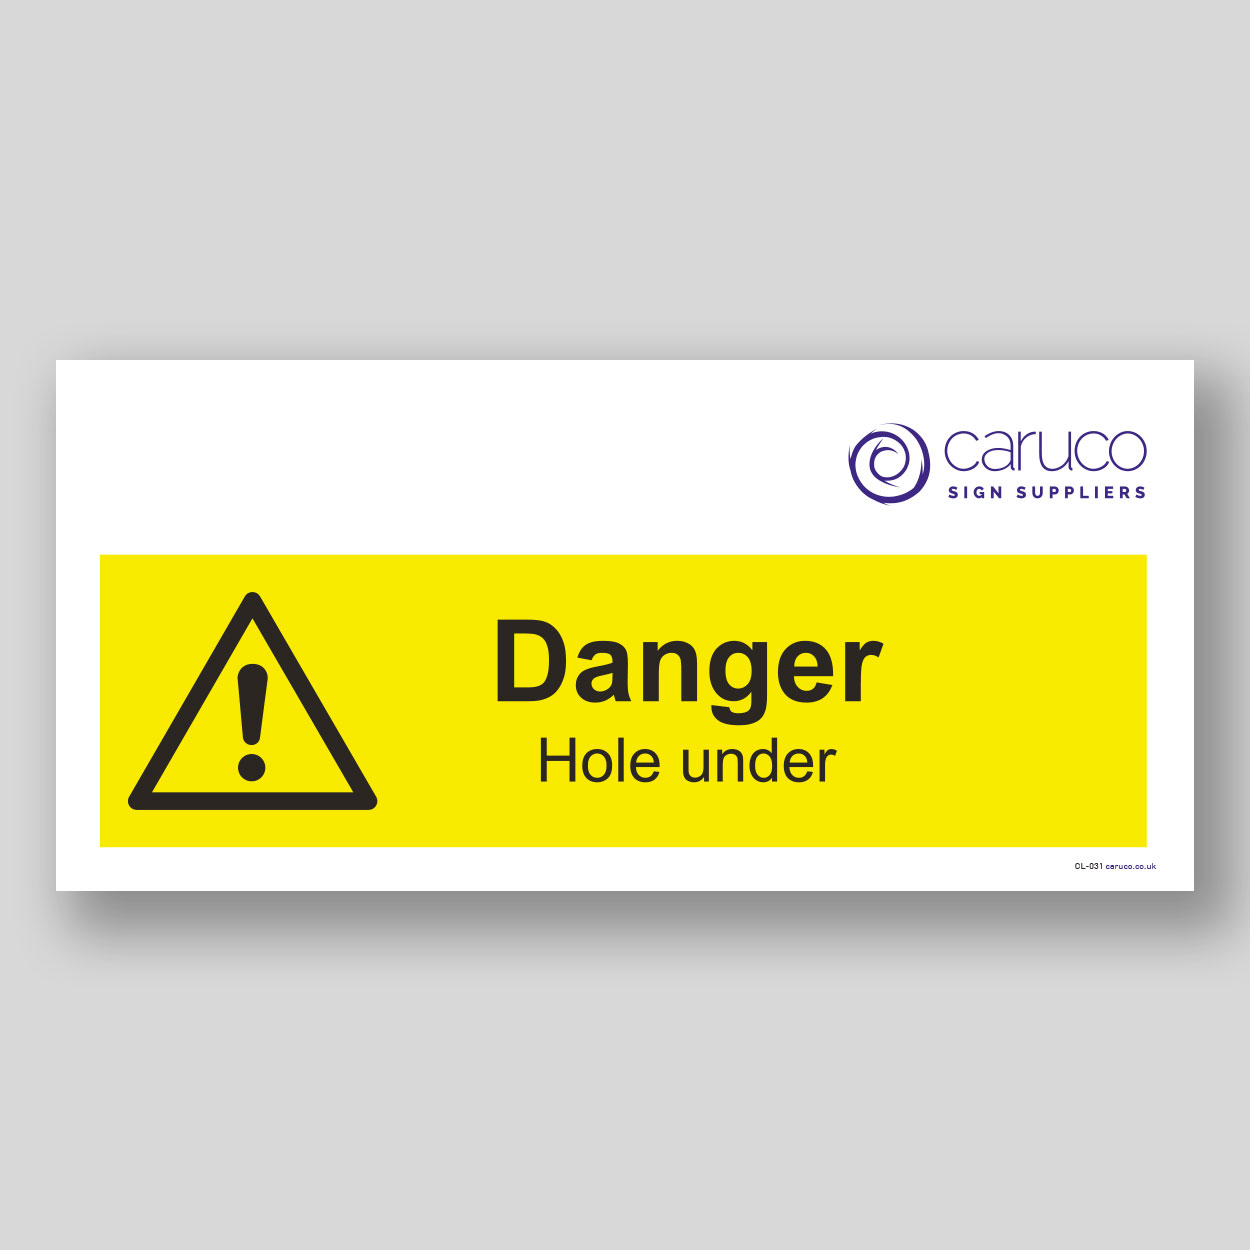 CL-031 Danger - hole under